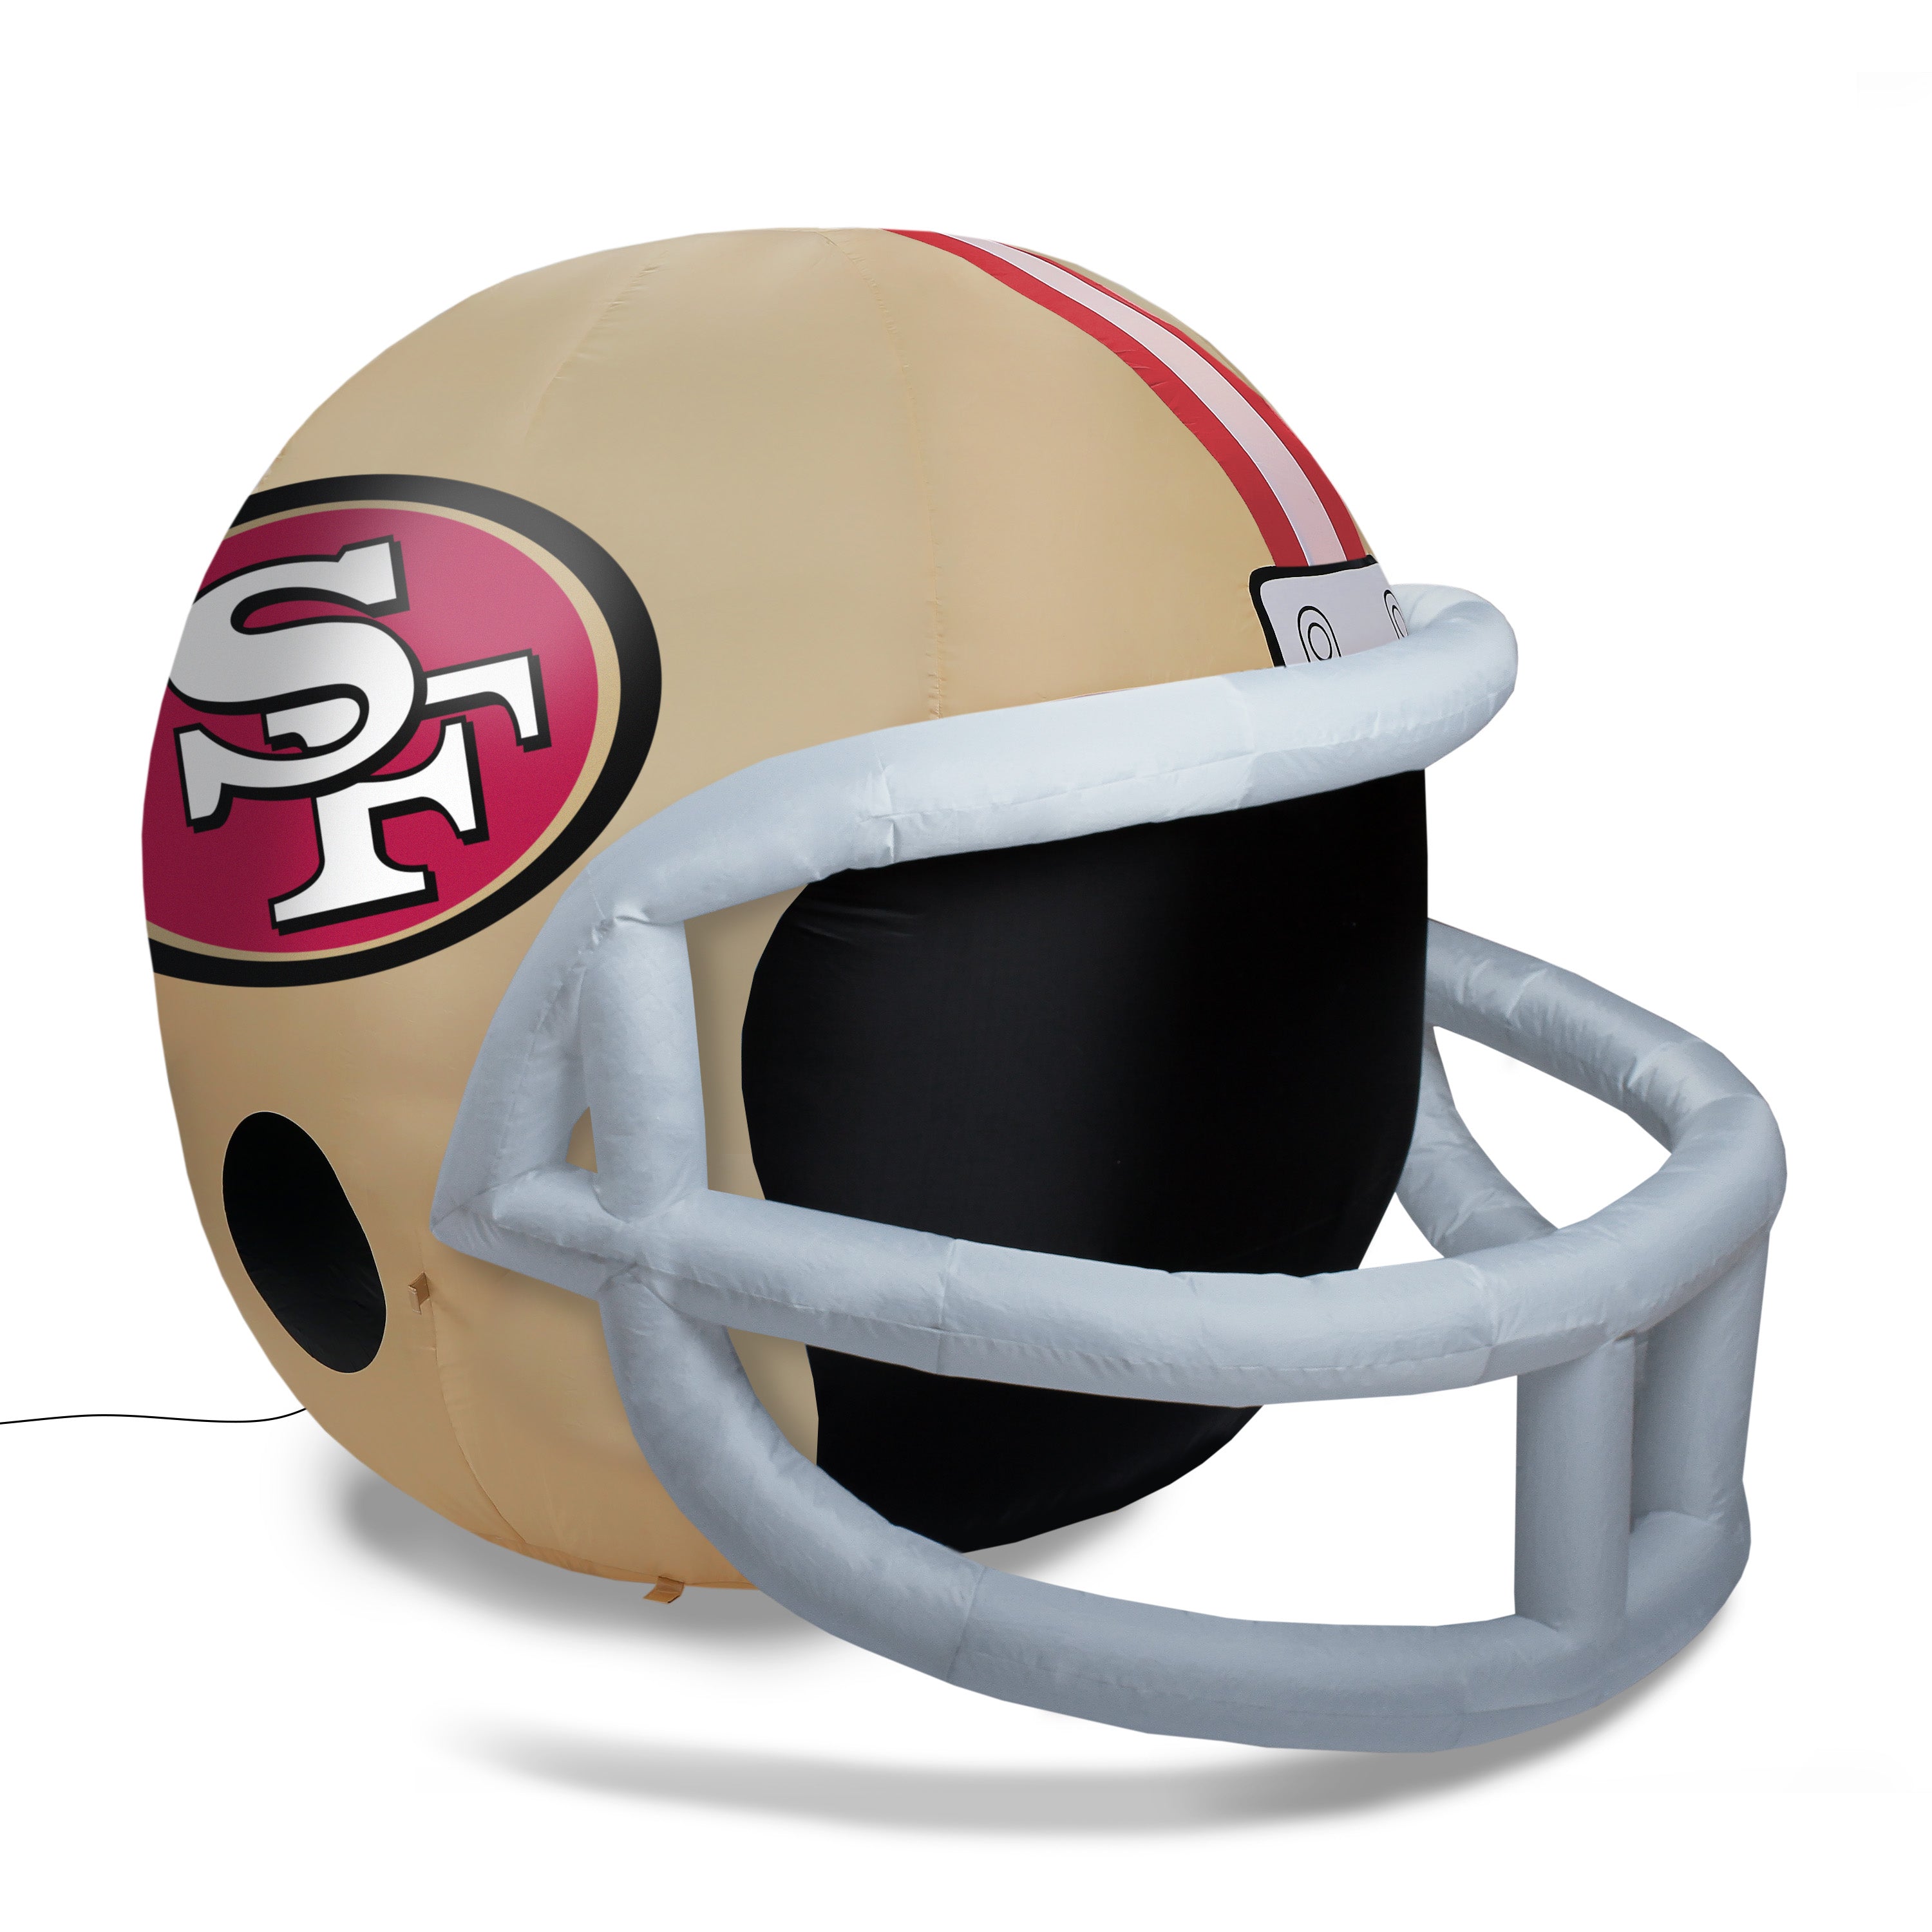 4' NFL San Francisco 49ers Team Inflatable Football Helmet